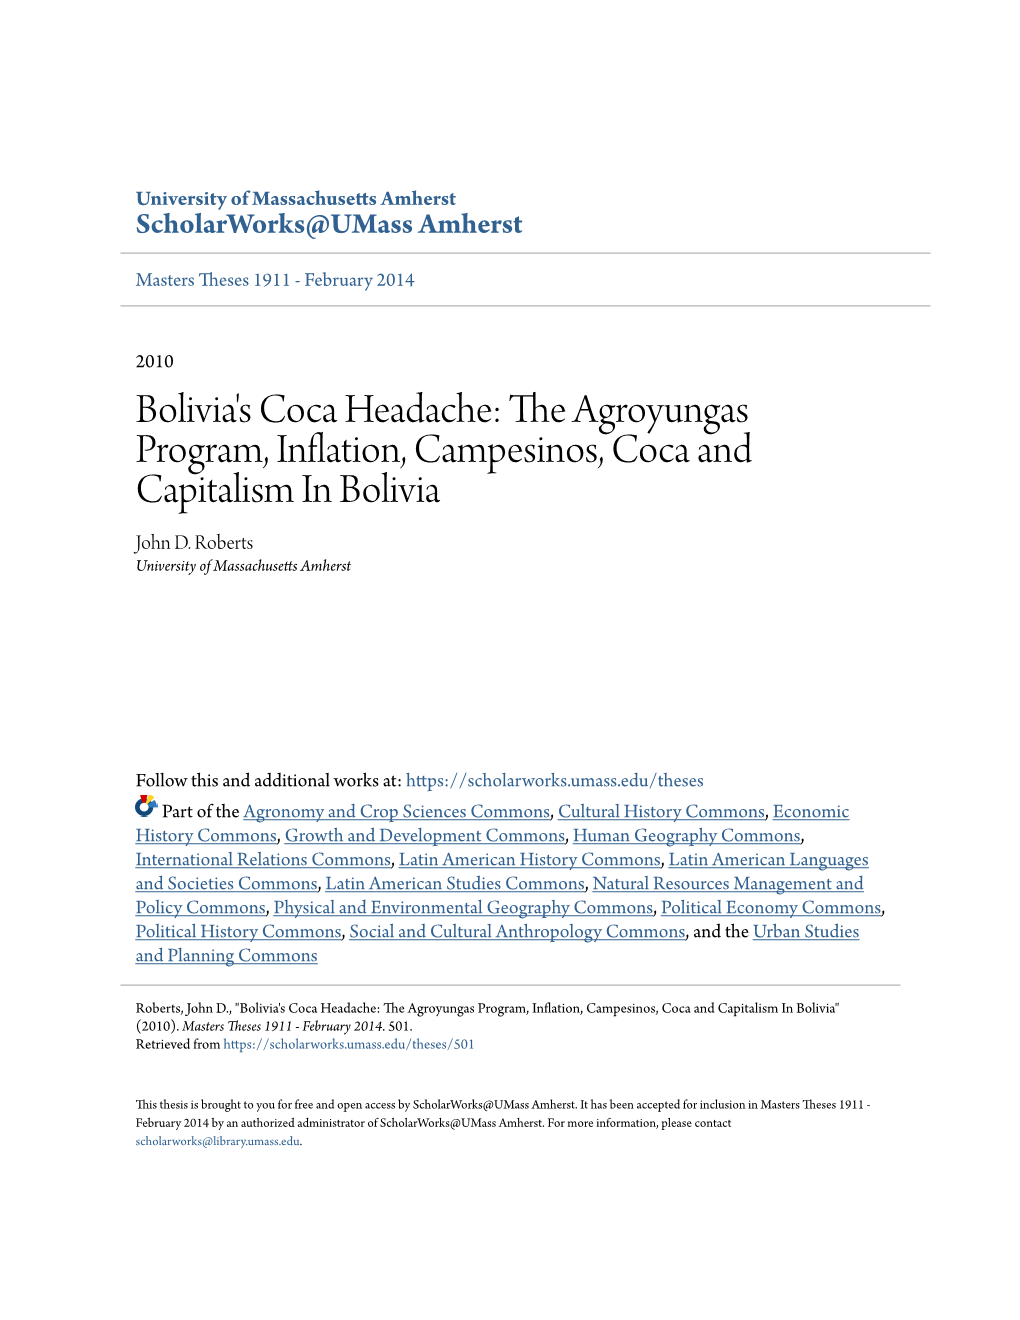 Bolivia's Coca Headache: the Agroyungas Program, Inflation, Campesinos, Coca and Capitalism in Bolivia John D